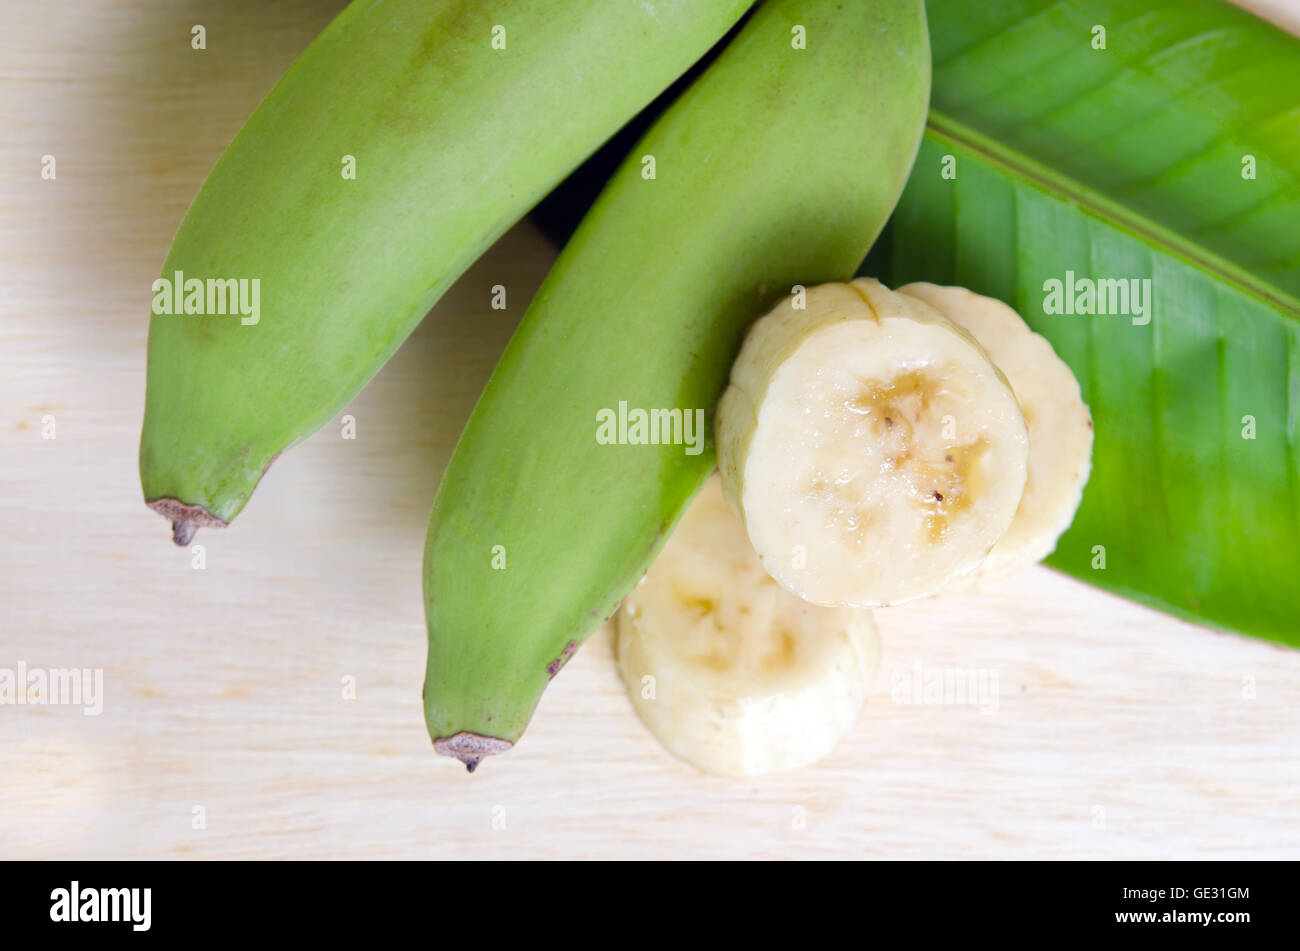 Banana (Other names are Musa acuminata, Musa balbisiana banana, and Musa x paradisiaca) fruit with banana leaf on wood board Stock Photo